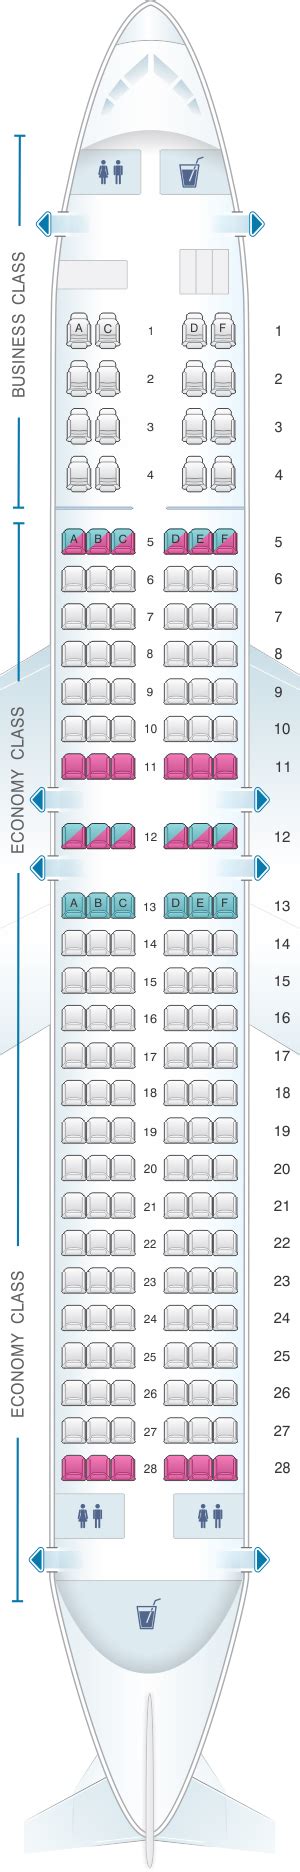 egyptair 737-800 seat map